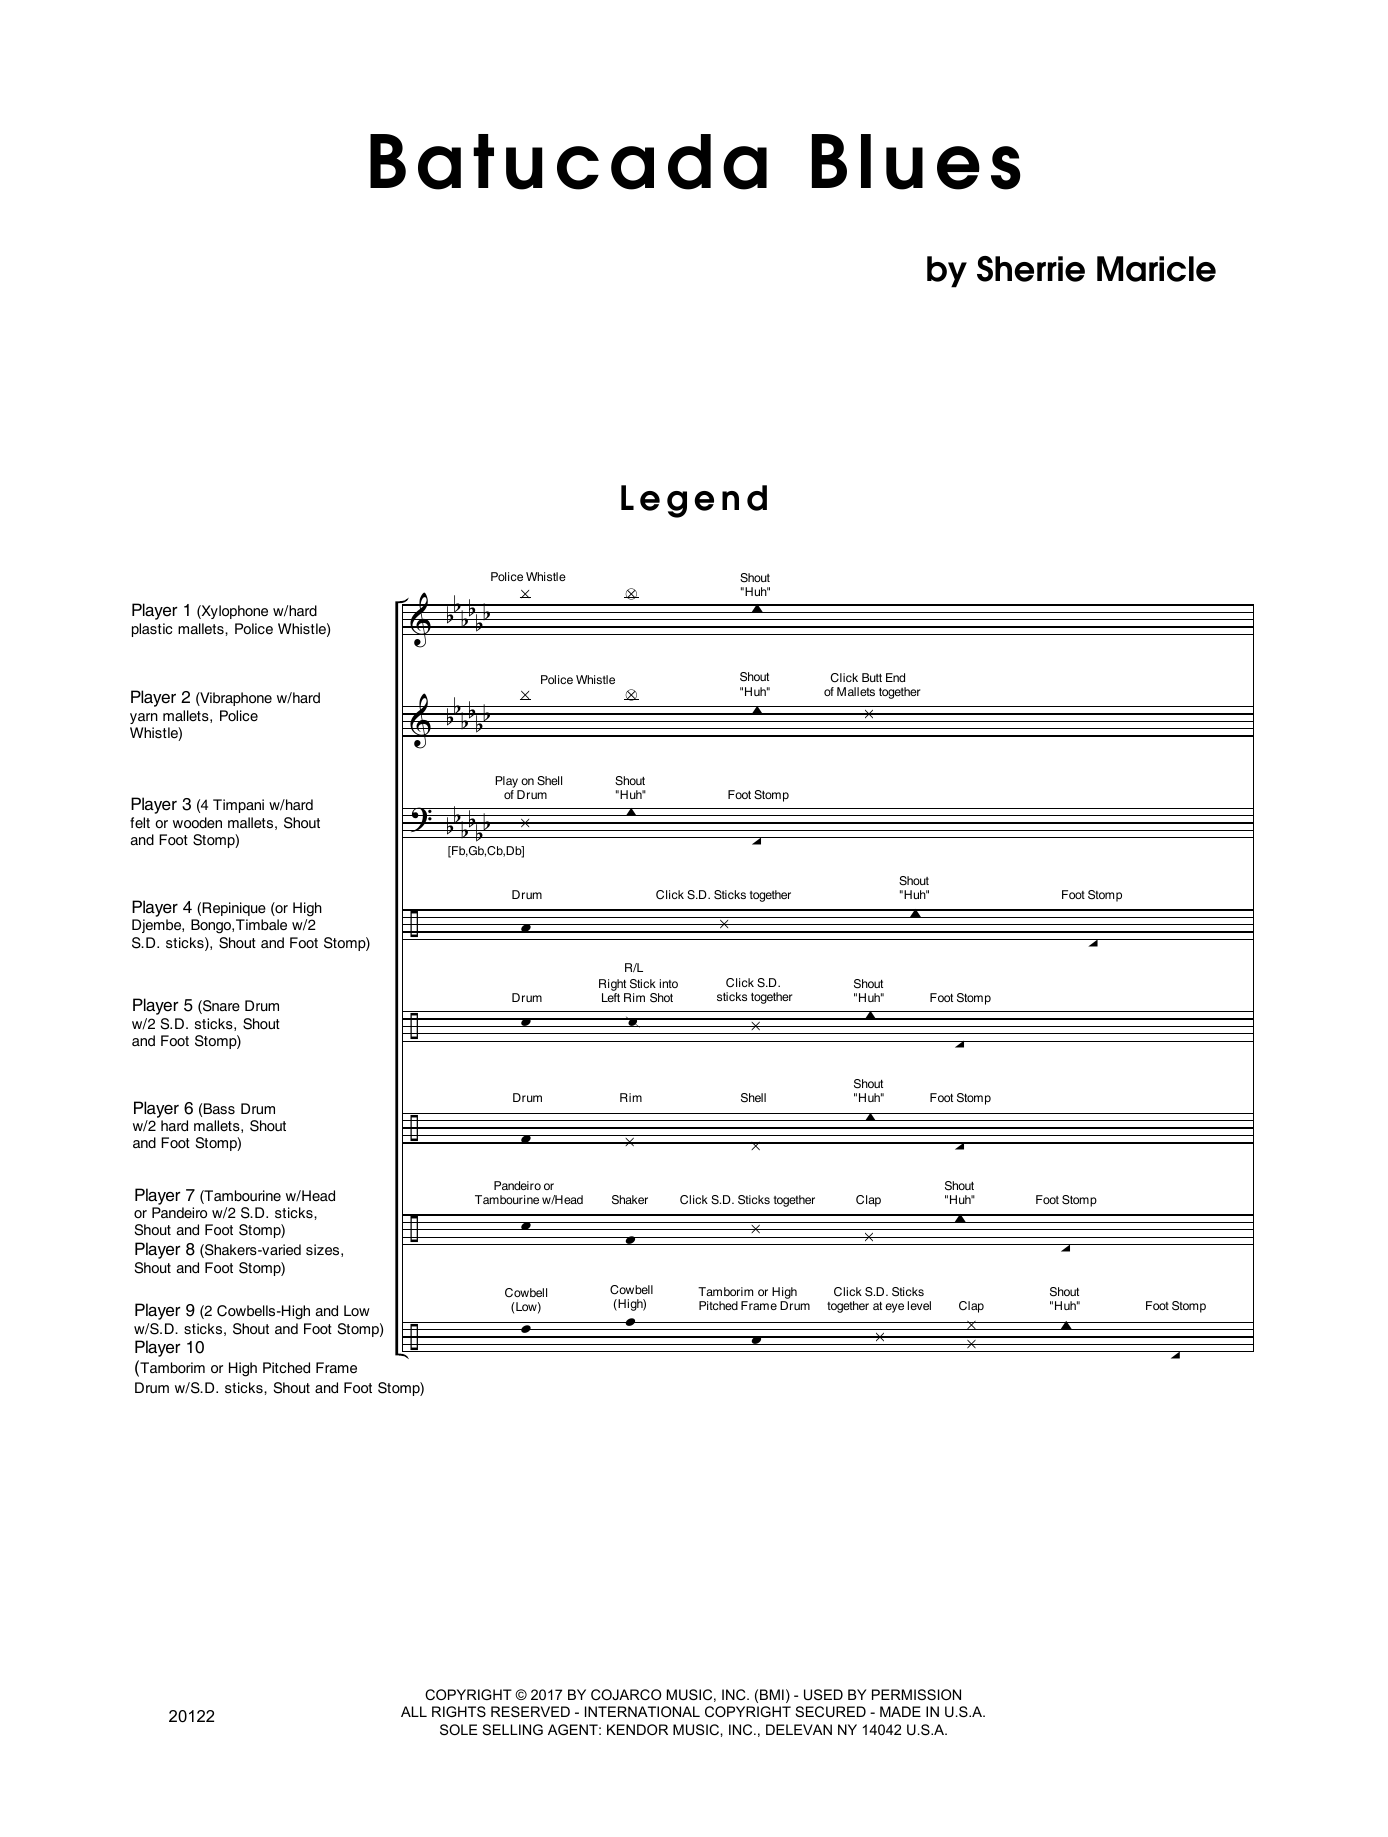 Download Sherrie Maricle Batucada Blues - Full Score Sheet Music